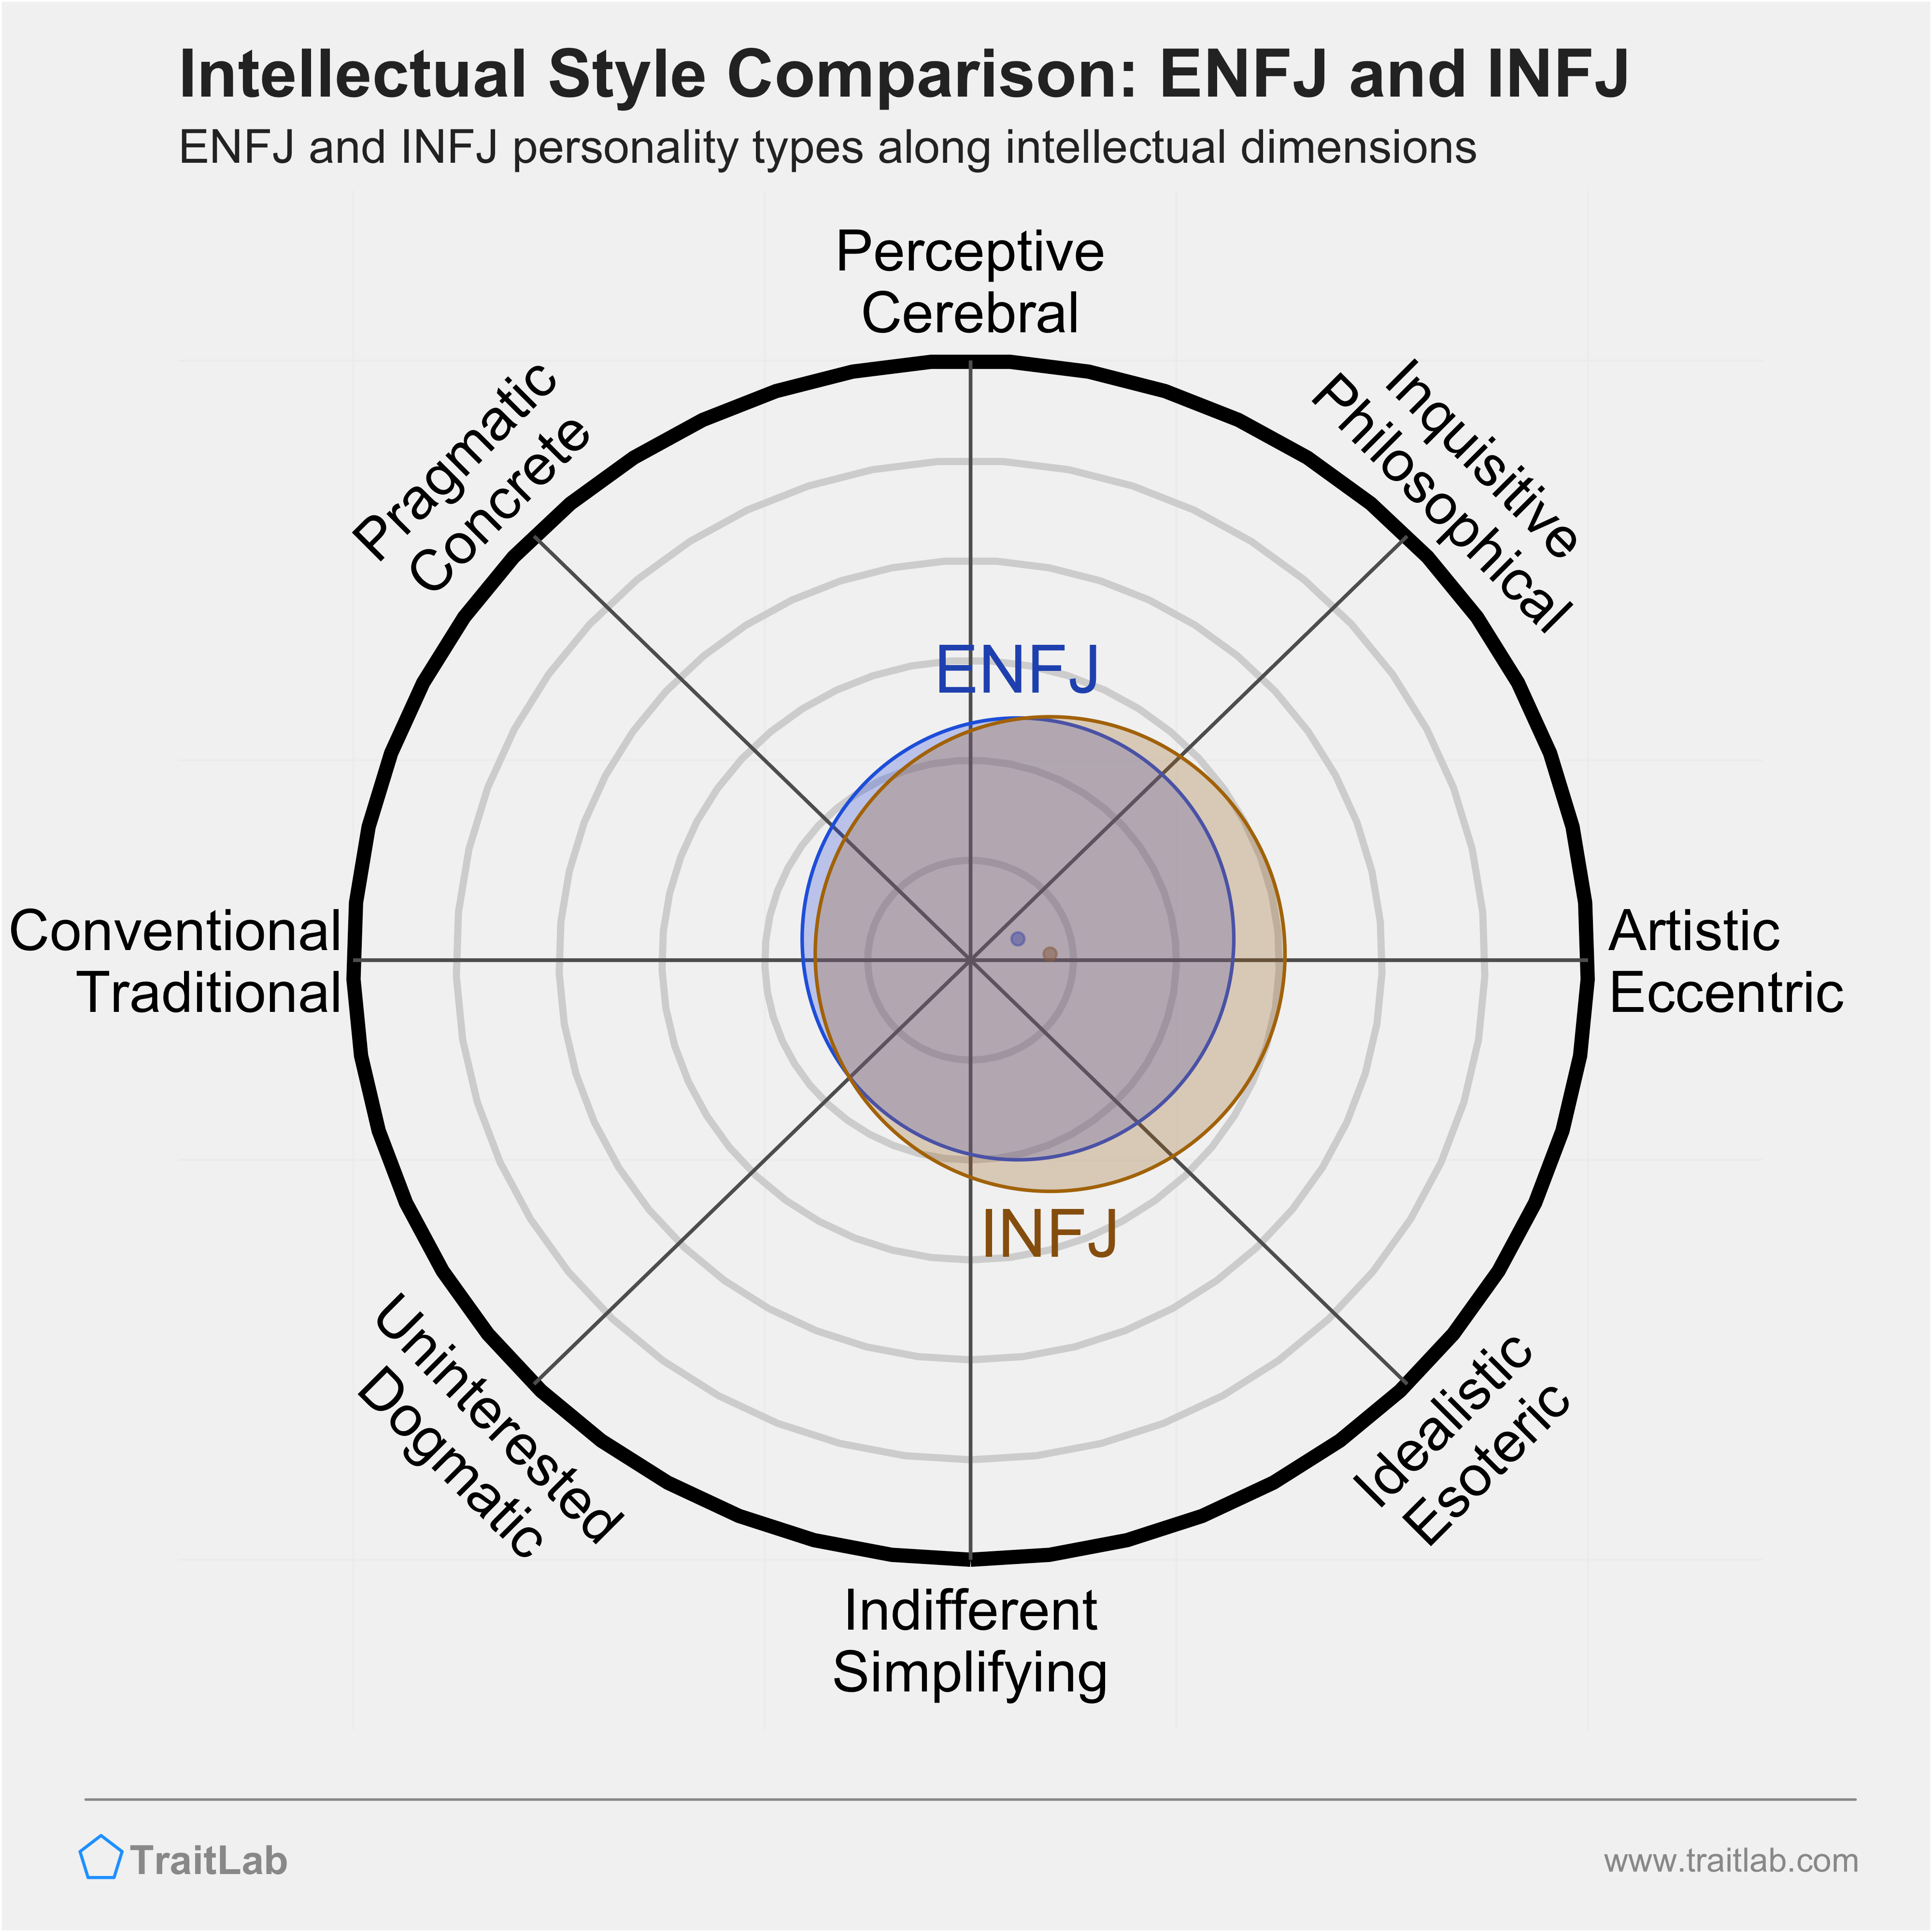 ENFJ and INFJ comparison across intellectual dimensions